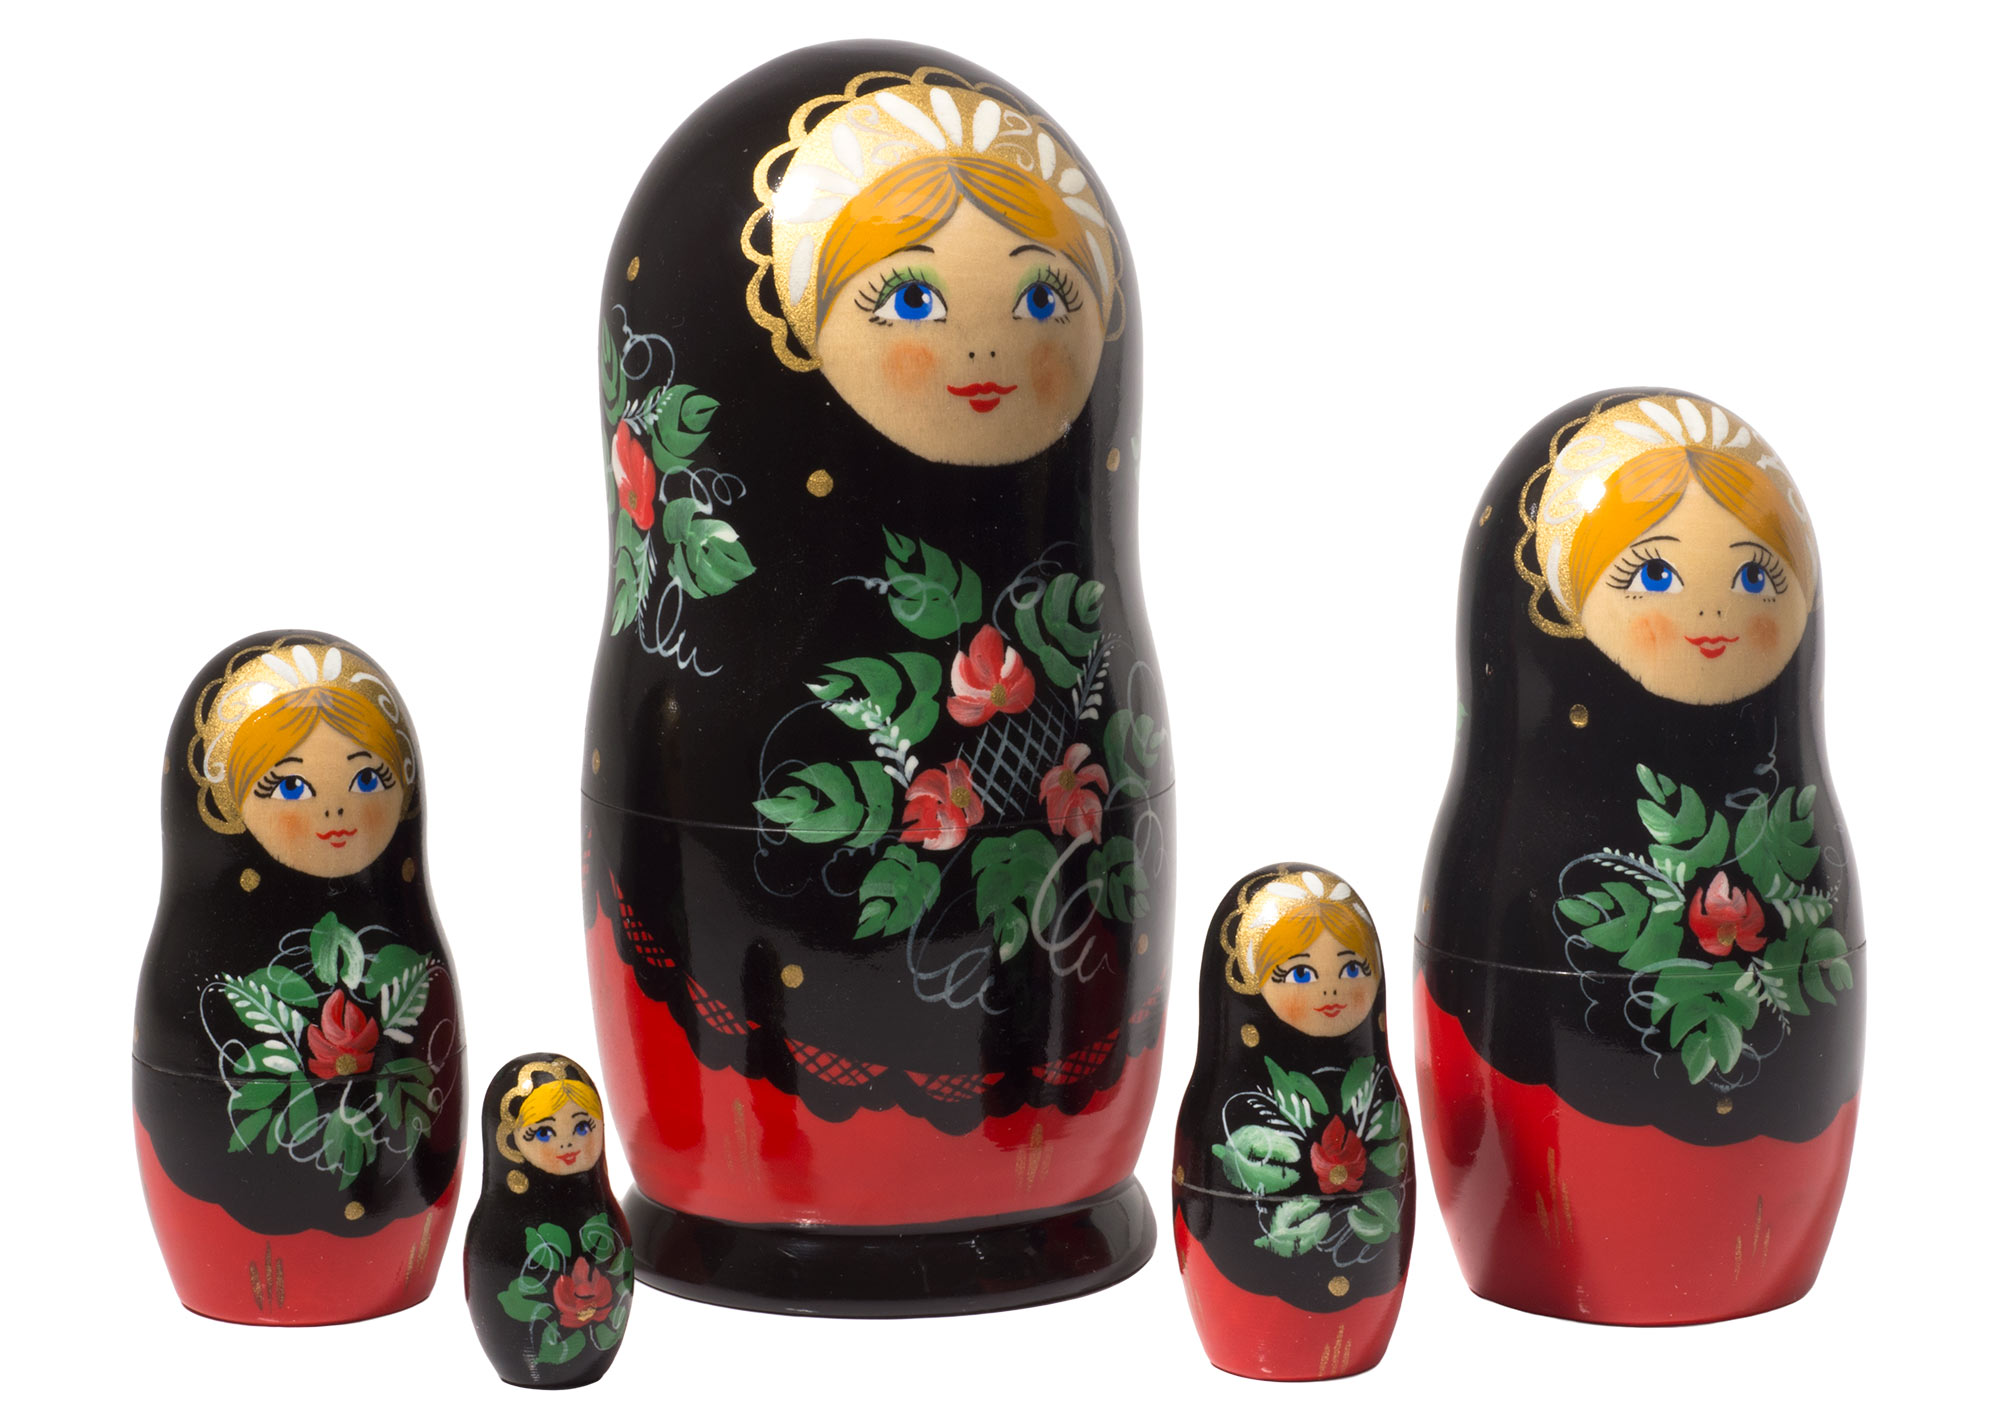 Buy Red & Black Classical Doll 5pc./6" at GoldenCockerel.com